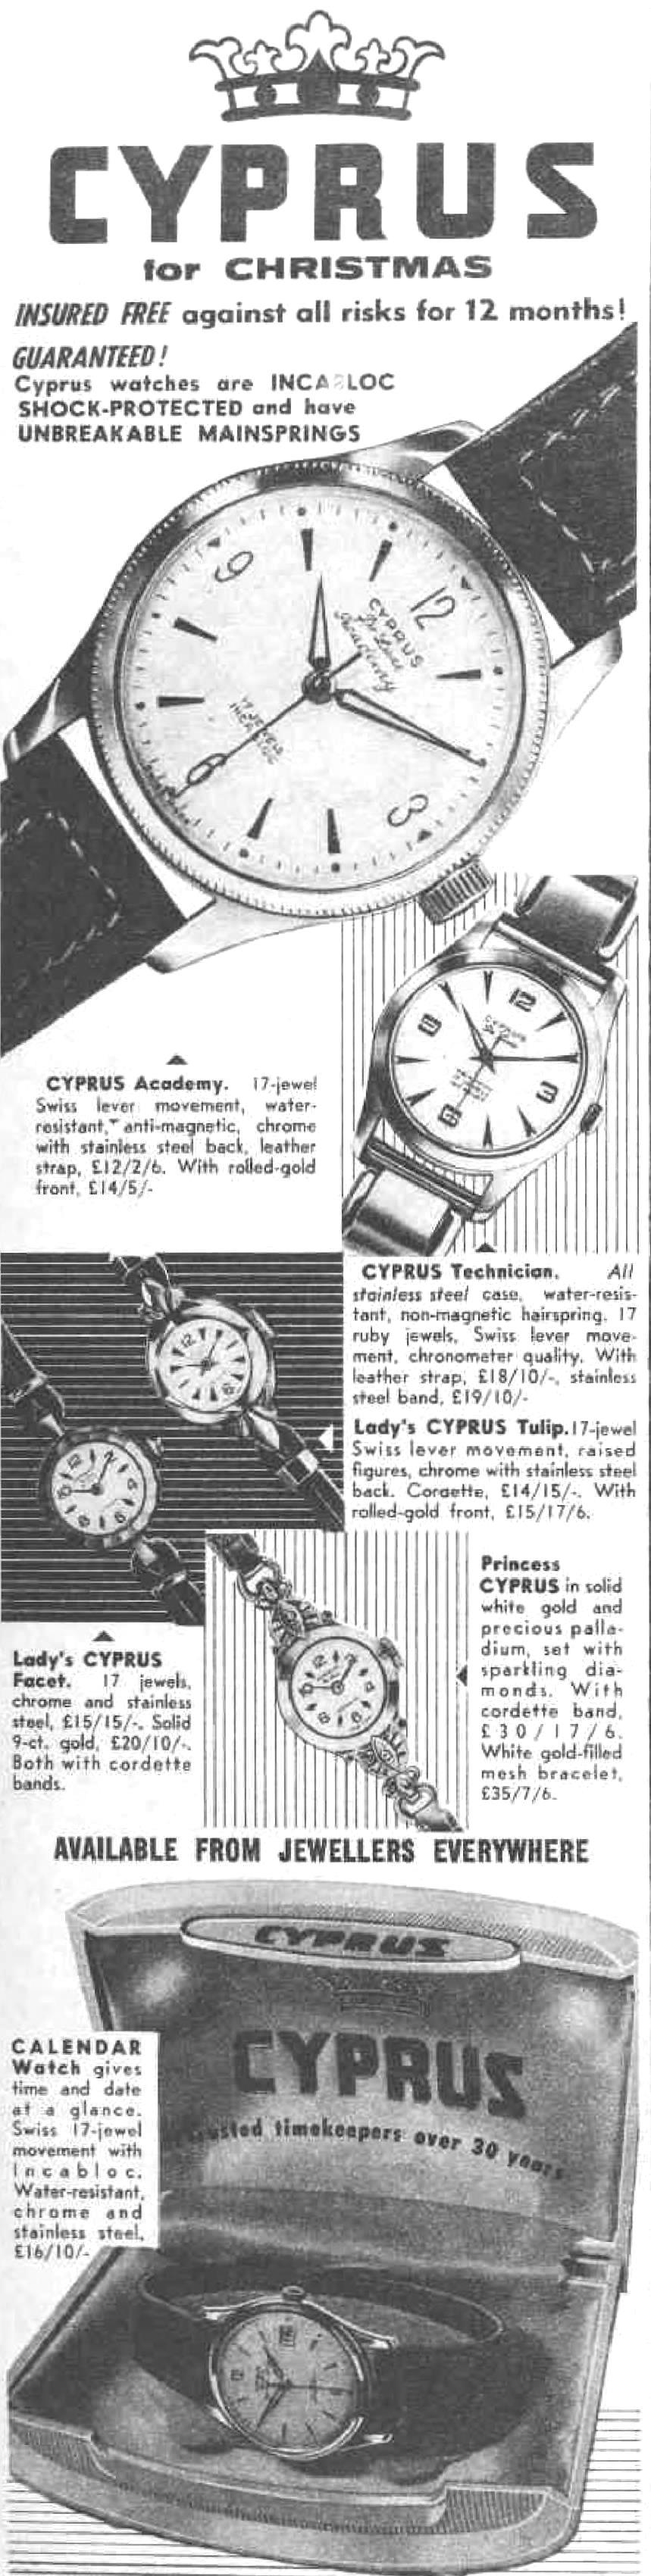 Cybrus 1950 502.jpg